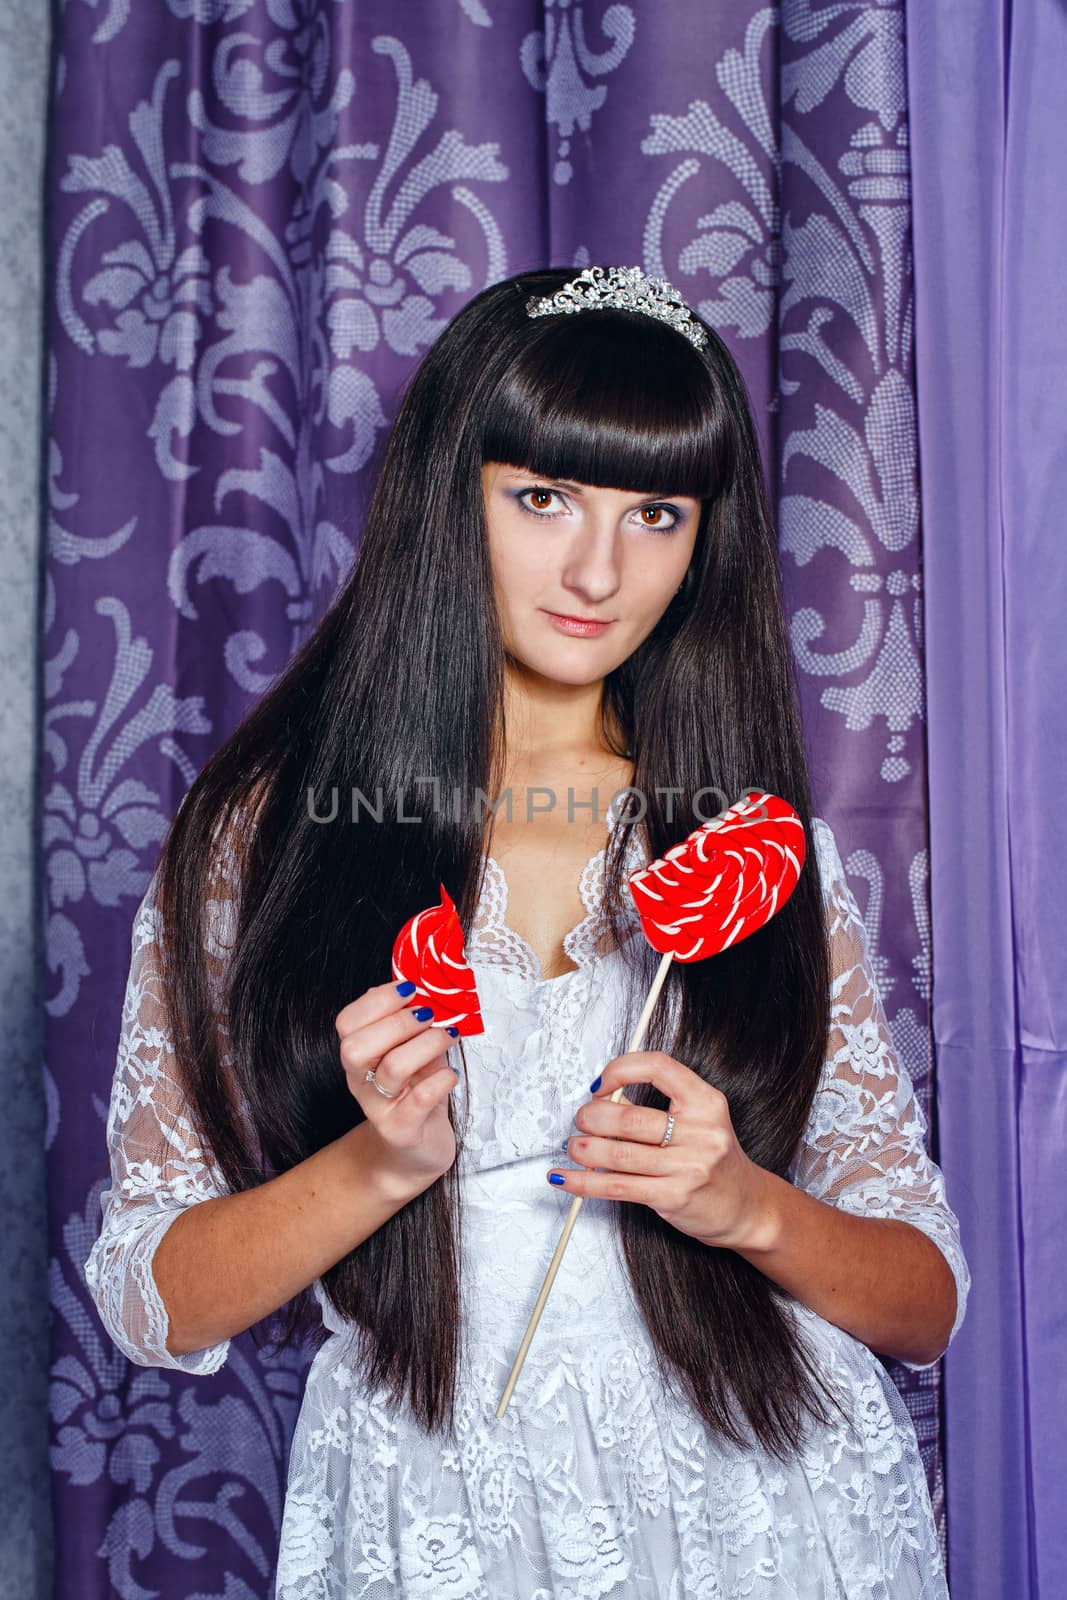 Girl and lollipop broken heart by Vagengeym